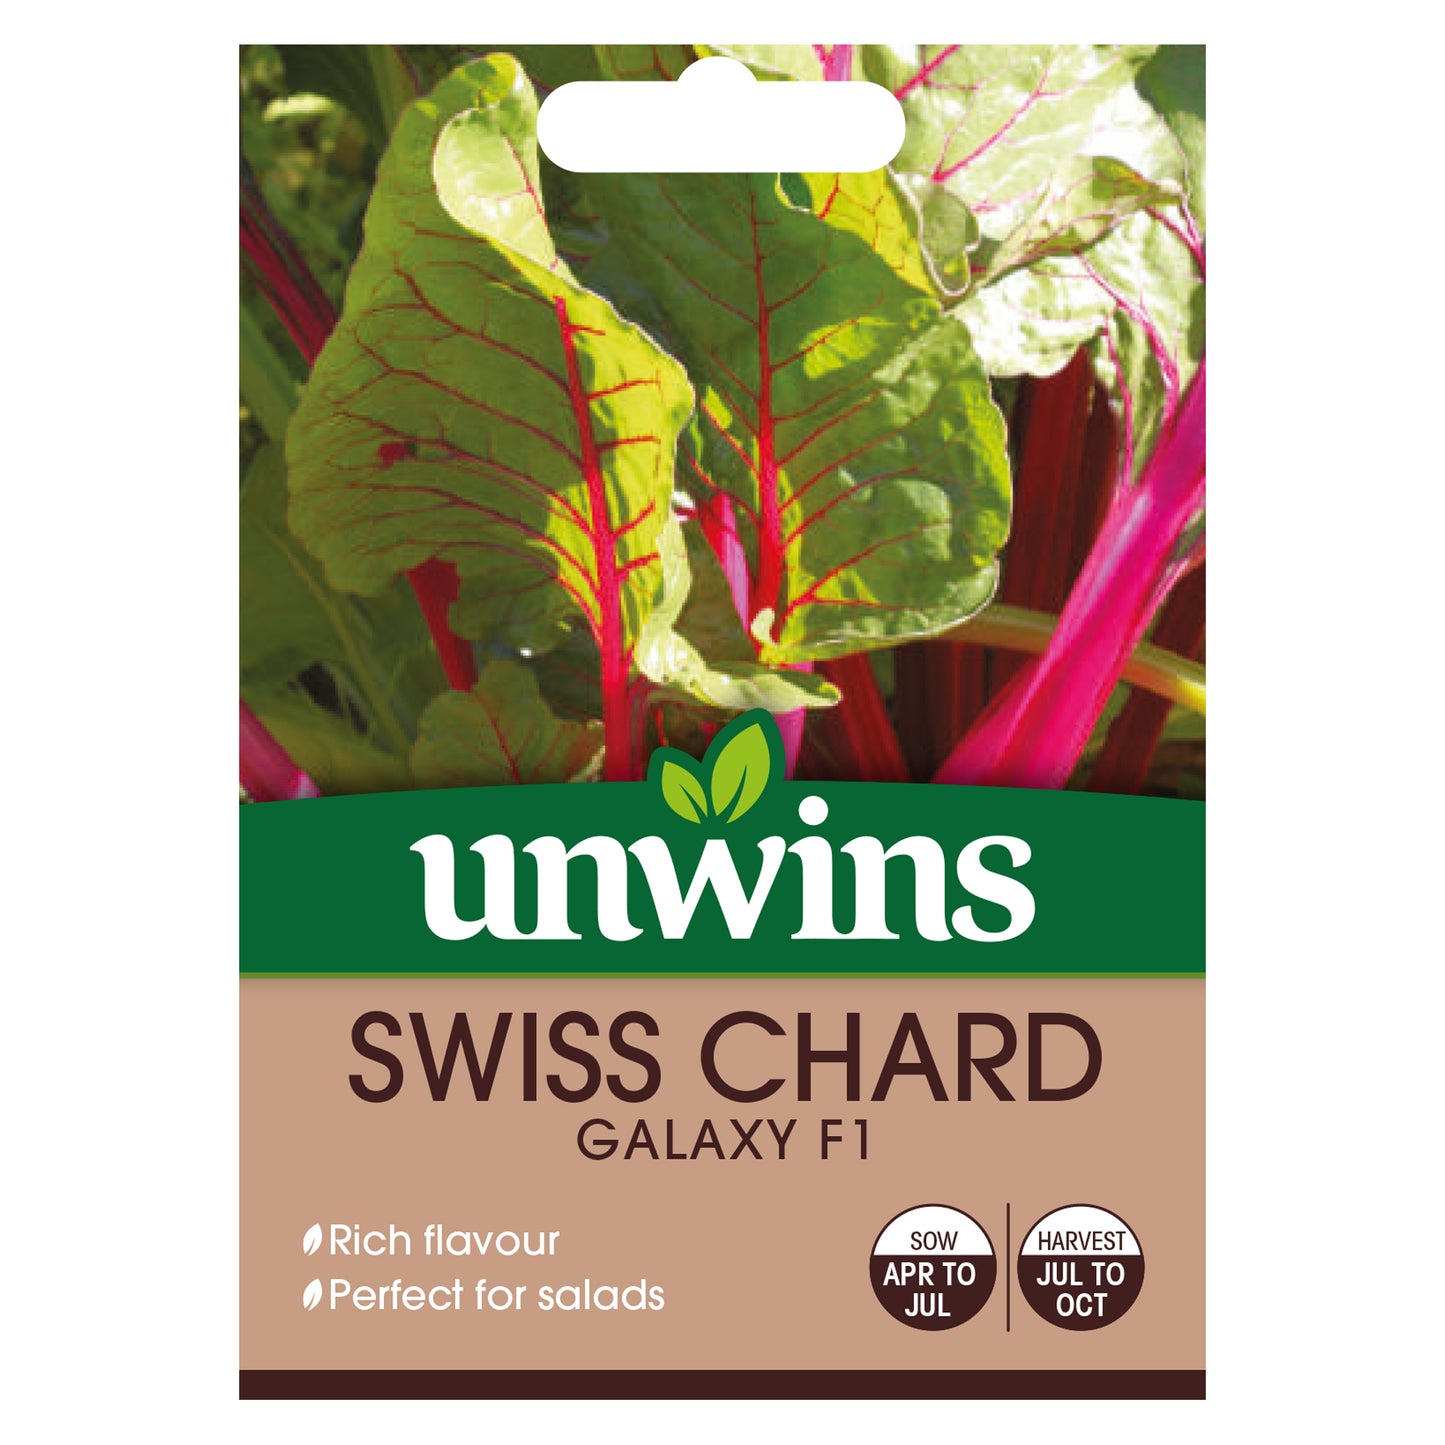 Unwins Swiss Chard Galaxy F1 Seeds - front